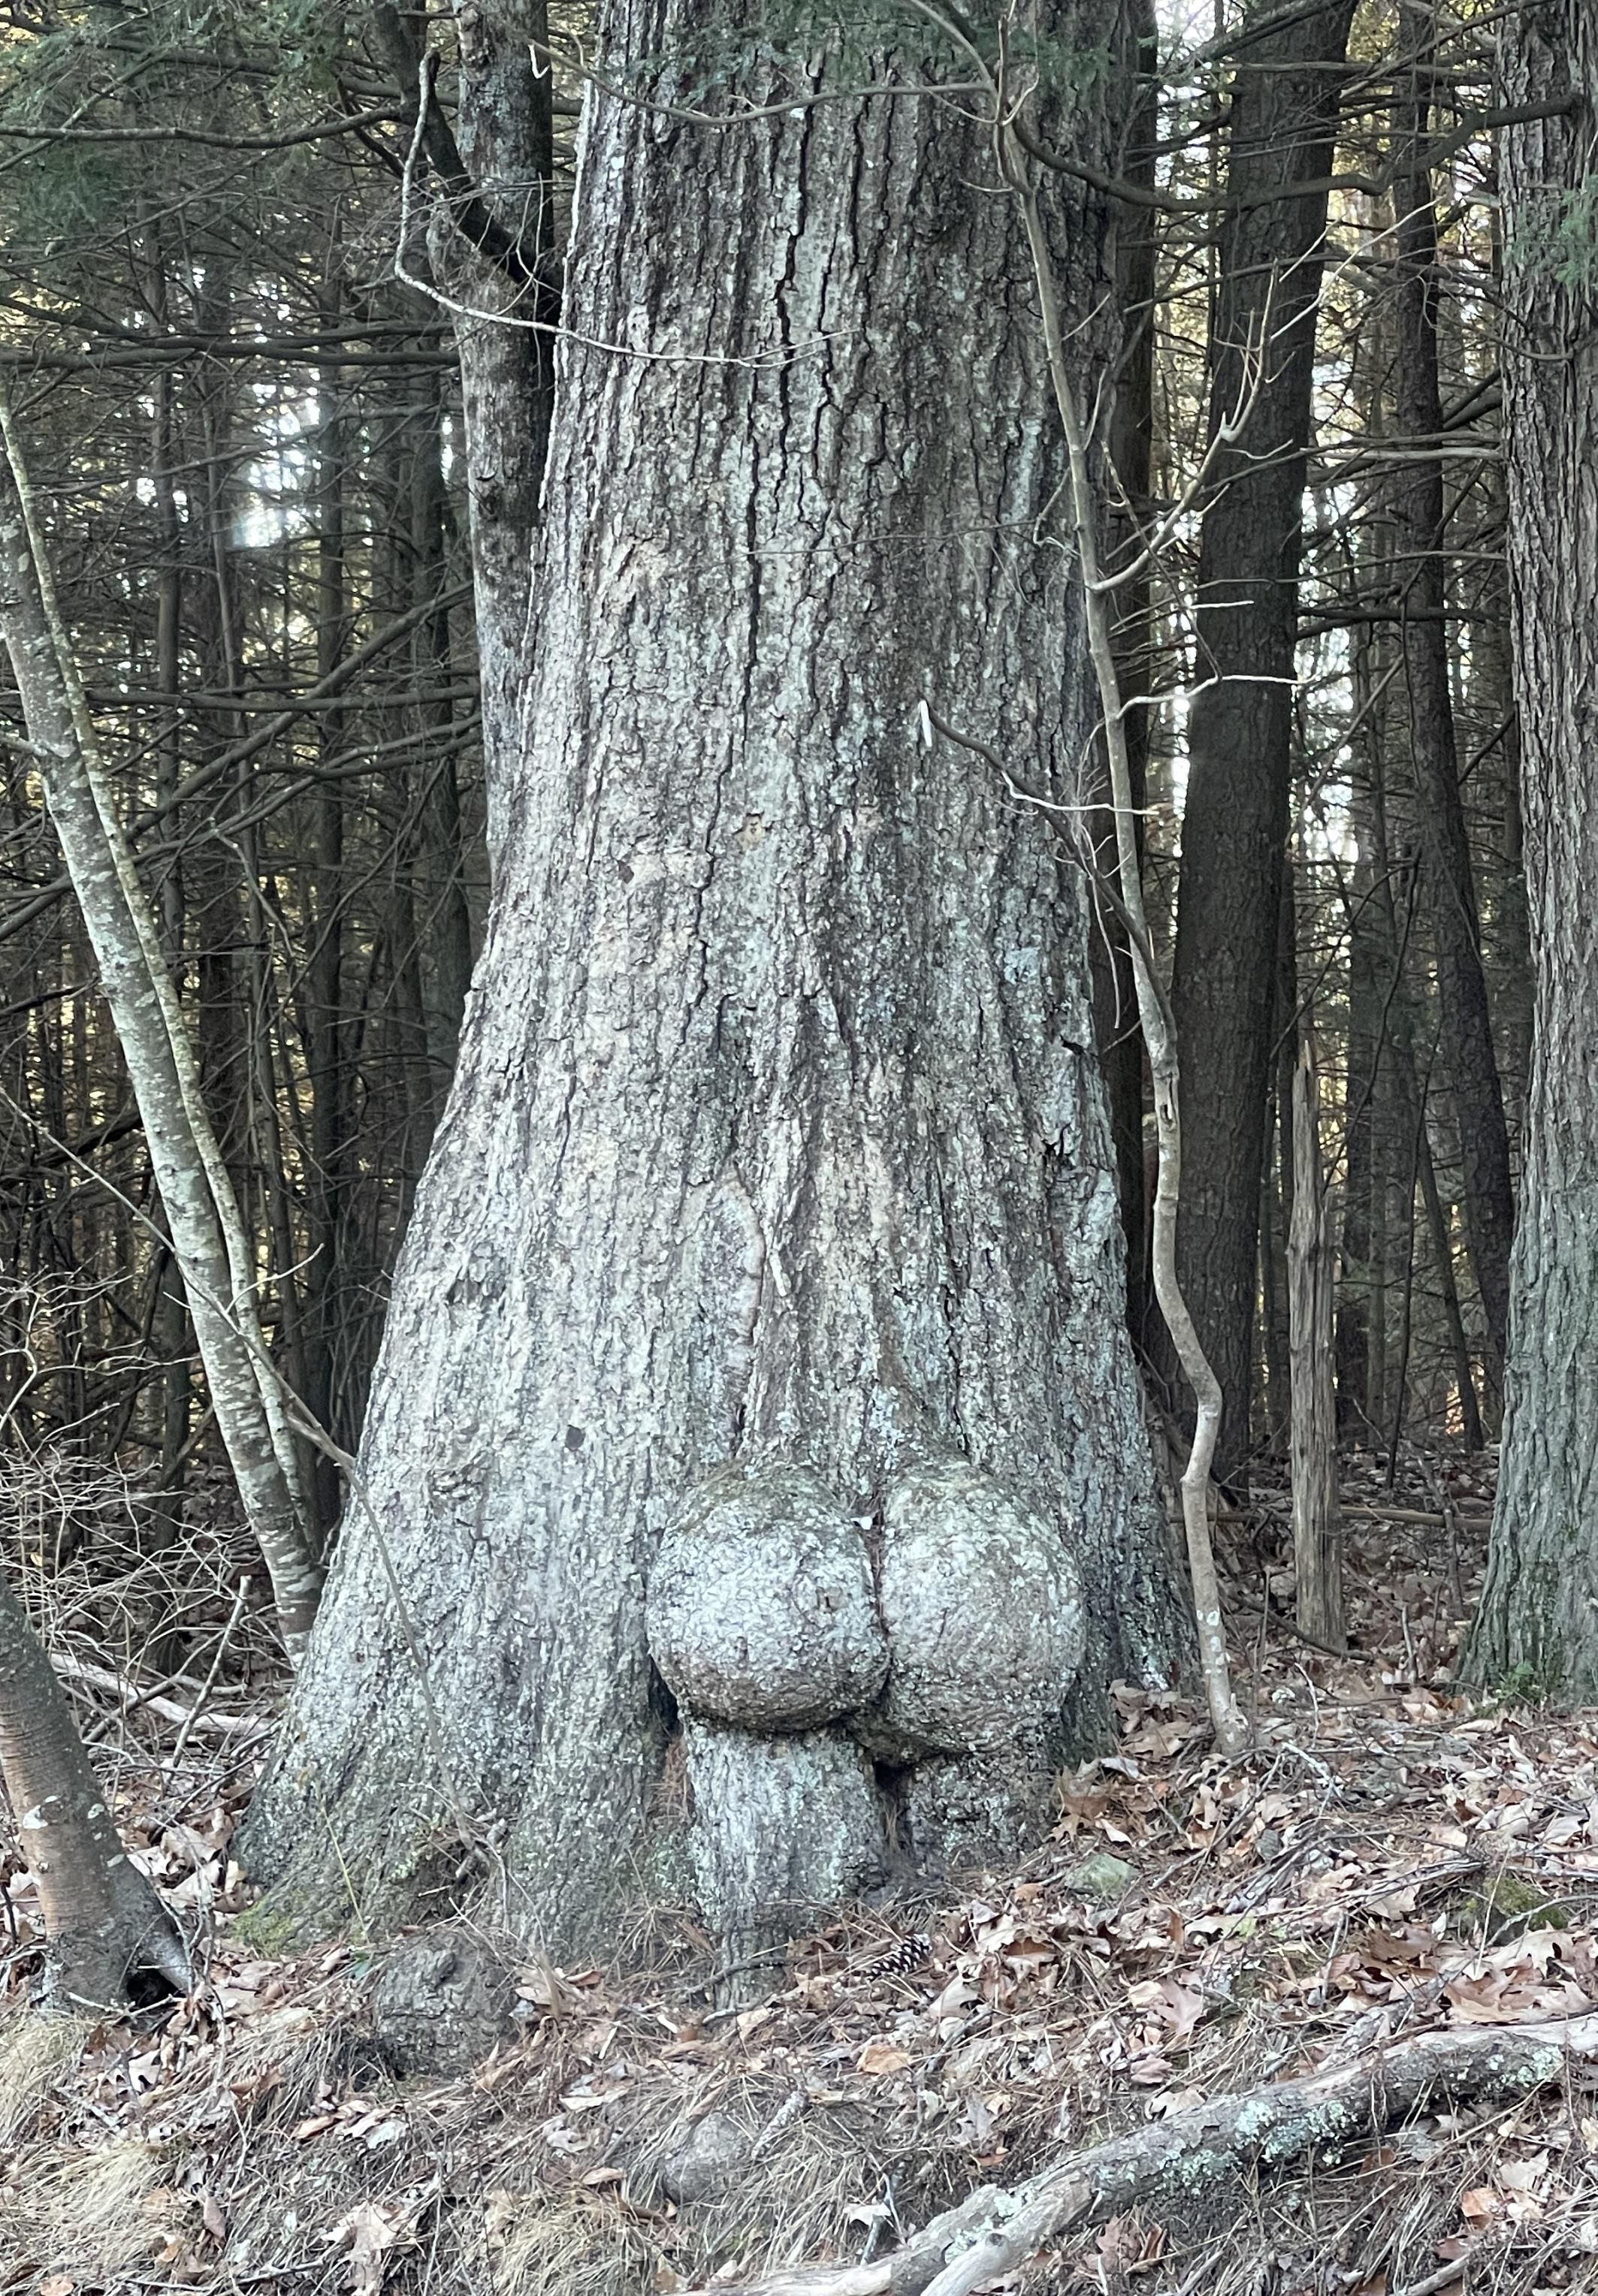 Big ass tree I found today